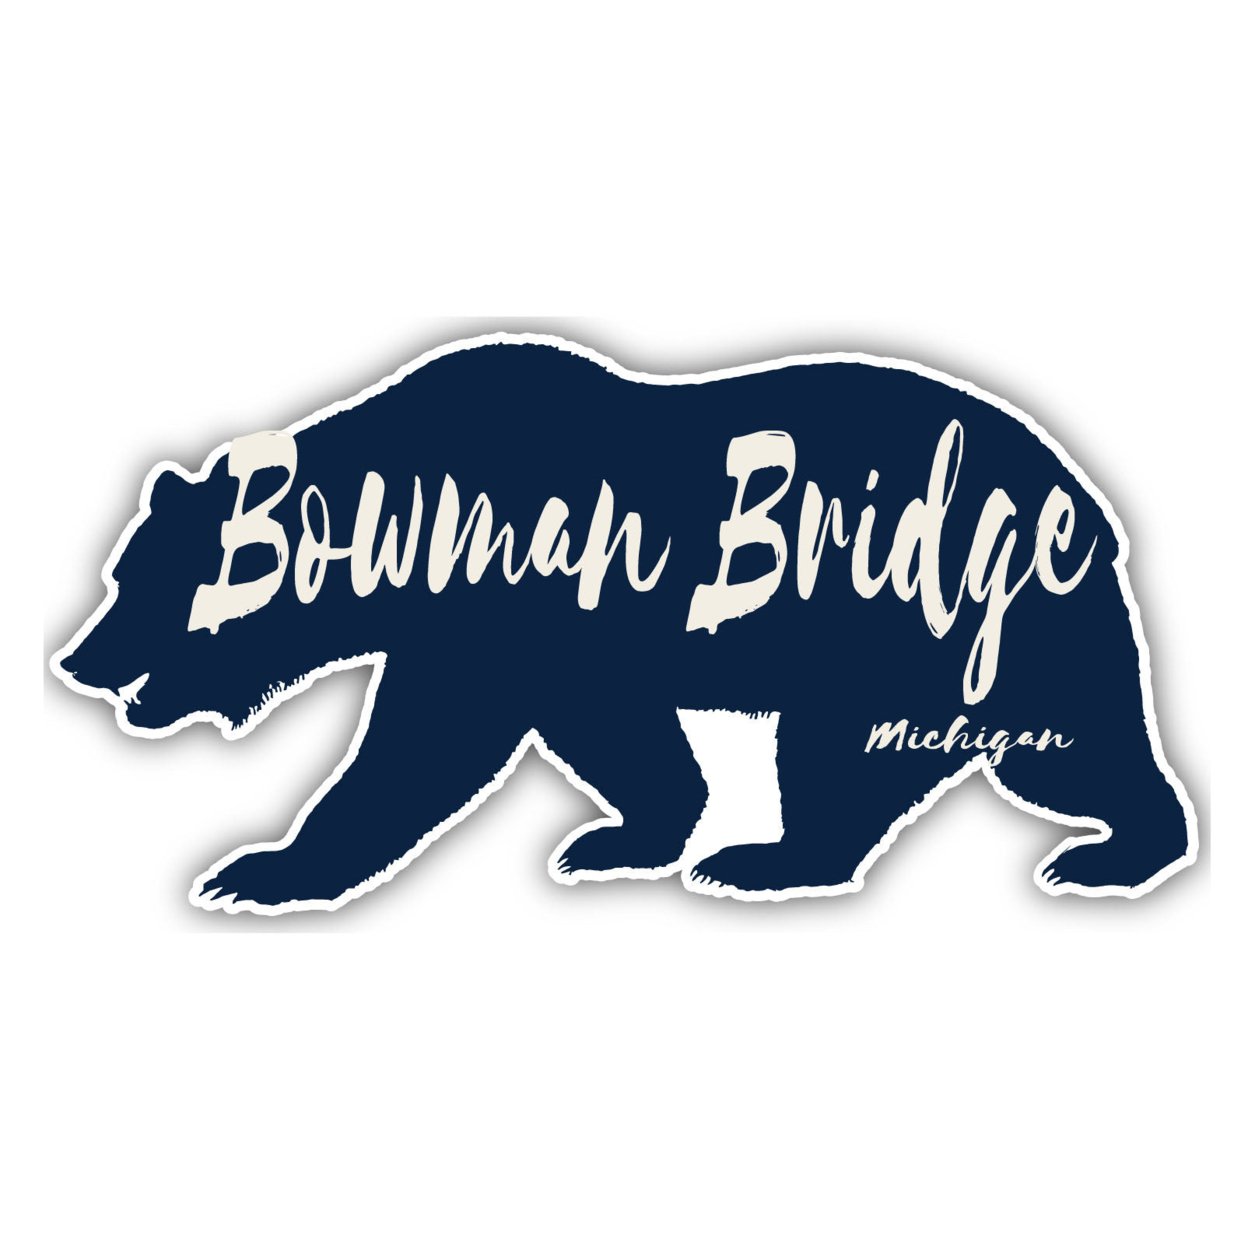 Bowman Bridge Michigan Souvenir Decorative Stickers (Choose Theme And Size) - Single Unit, 12-Inch, Bear